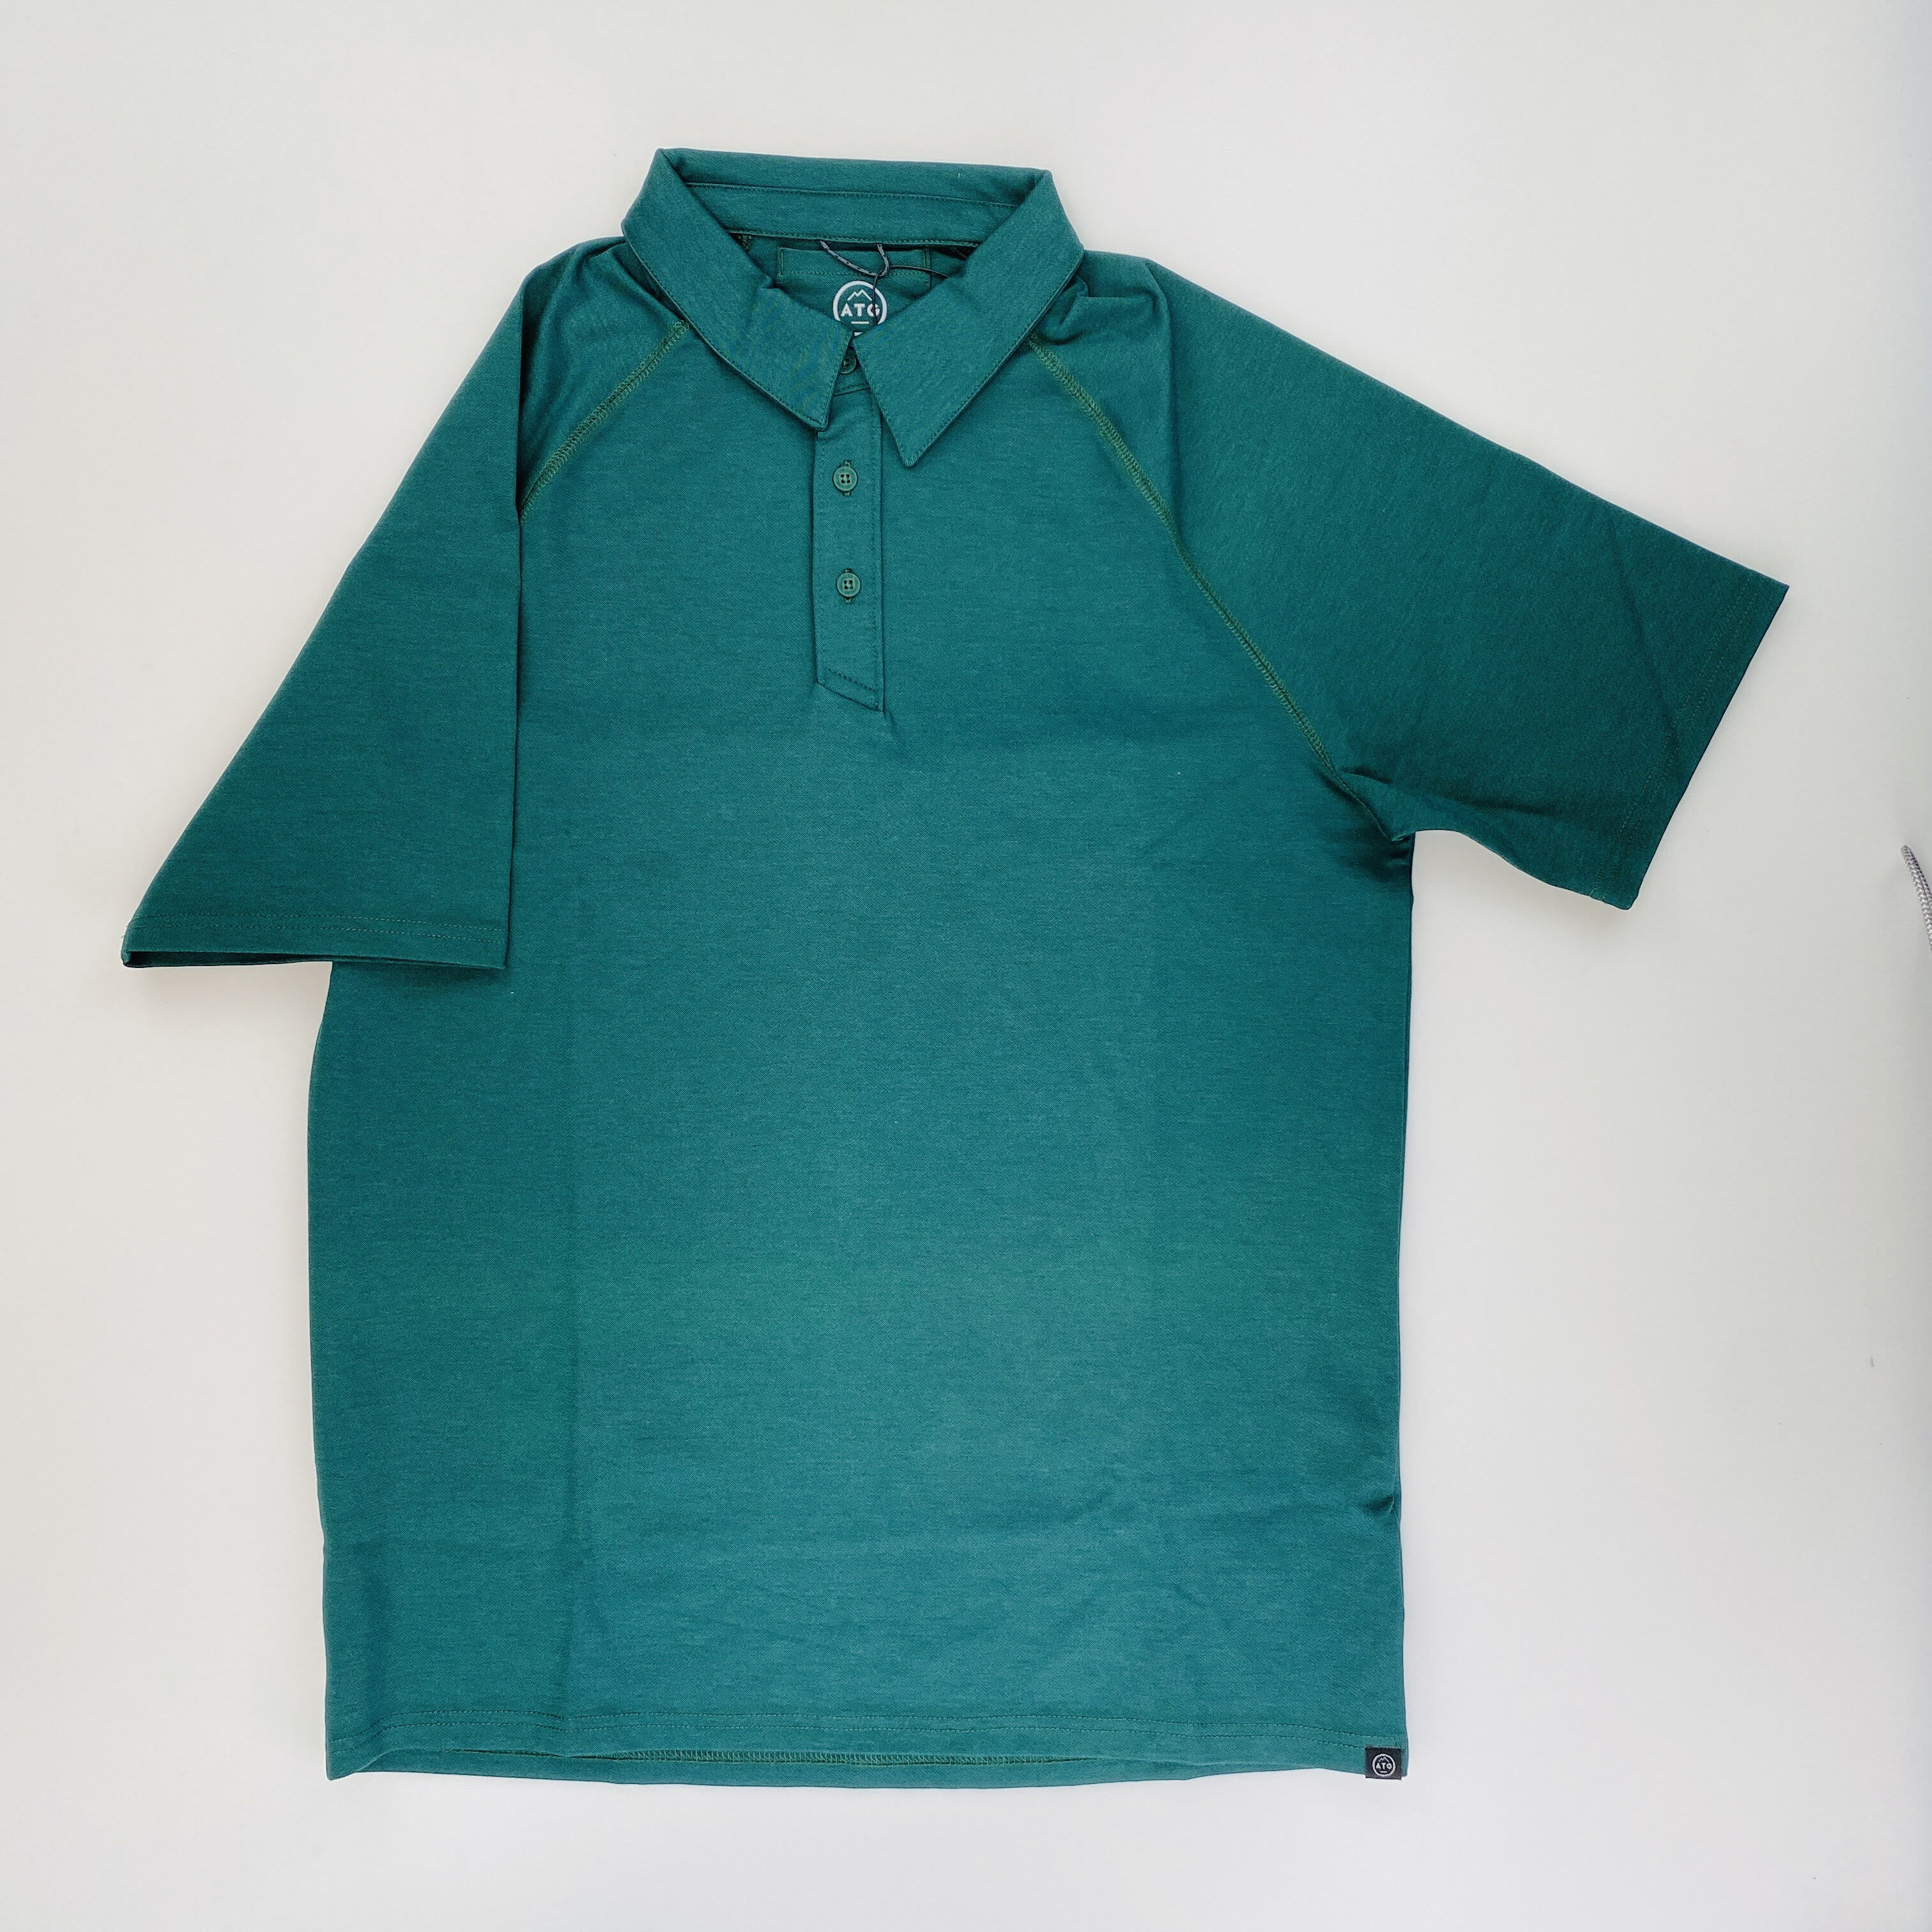 Wrangler Ss Performance Polo - Second Hand Polo shirt - Men's - Green - L | Hardloop